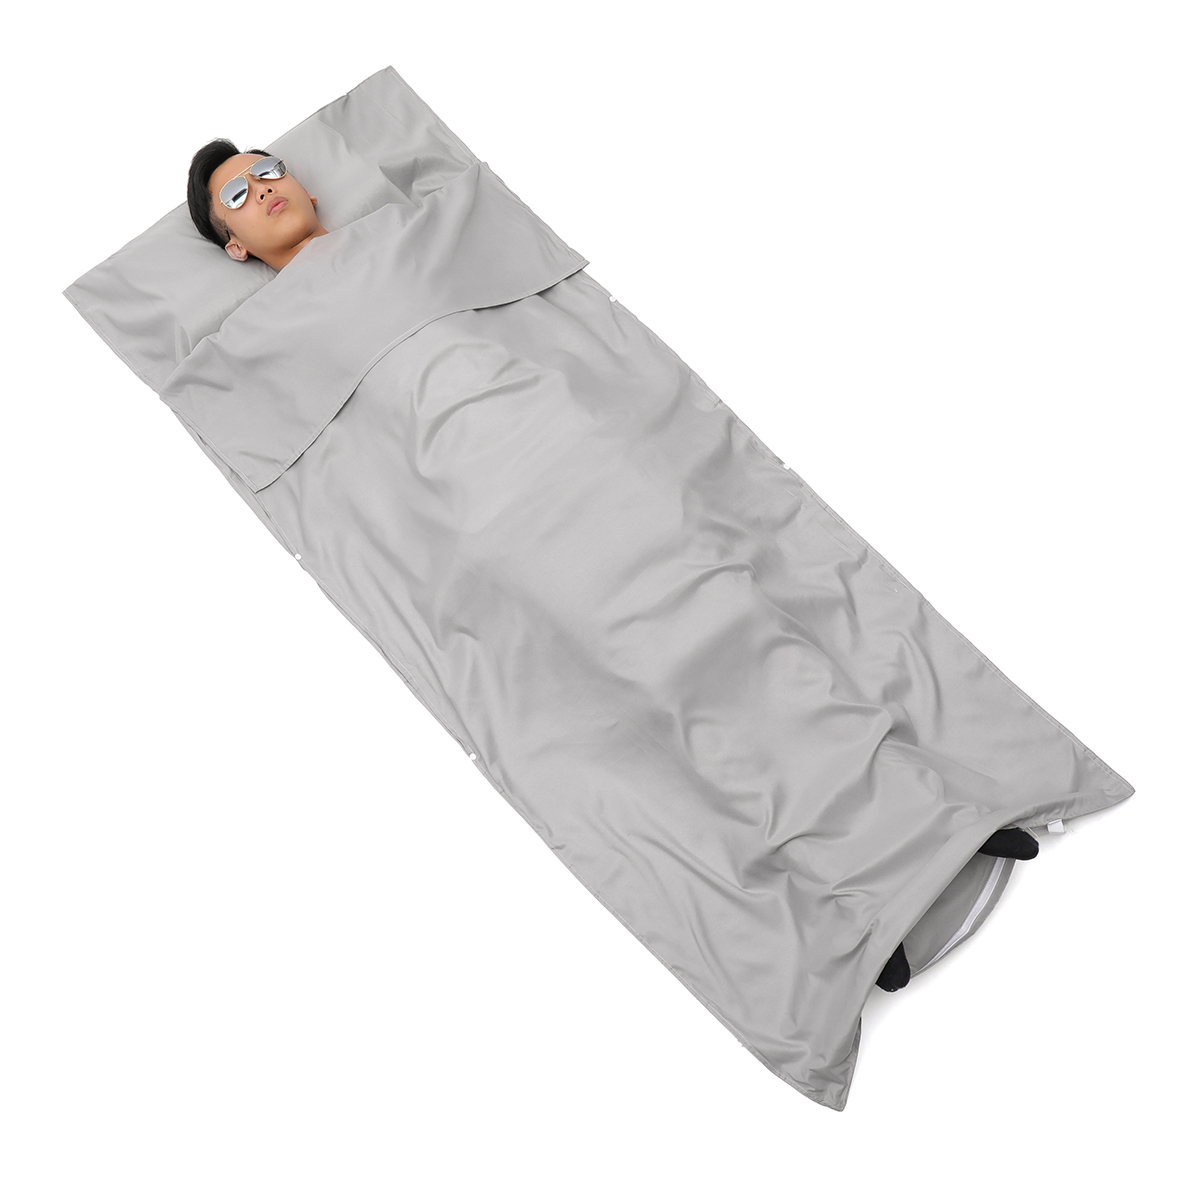 Portable-Sleeping-Bag-Cover-Ultralight-Sleep-Sheet-Outdoor-Camping-Hiking-Travel-Bag-1883995-13